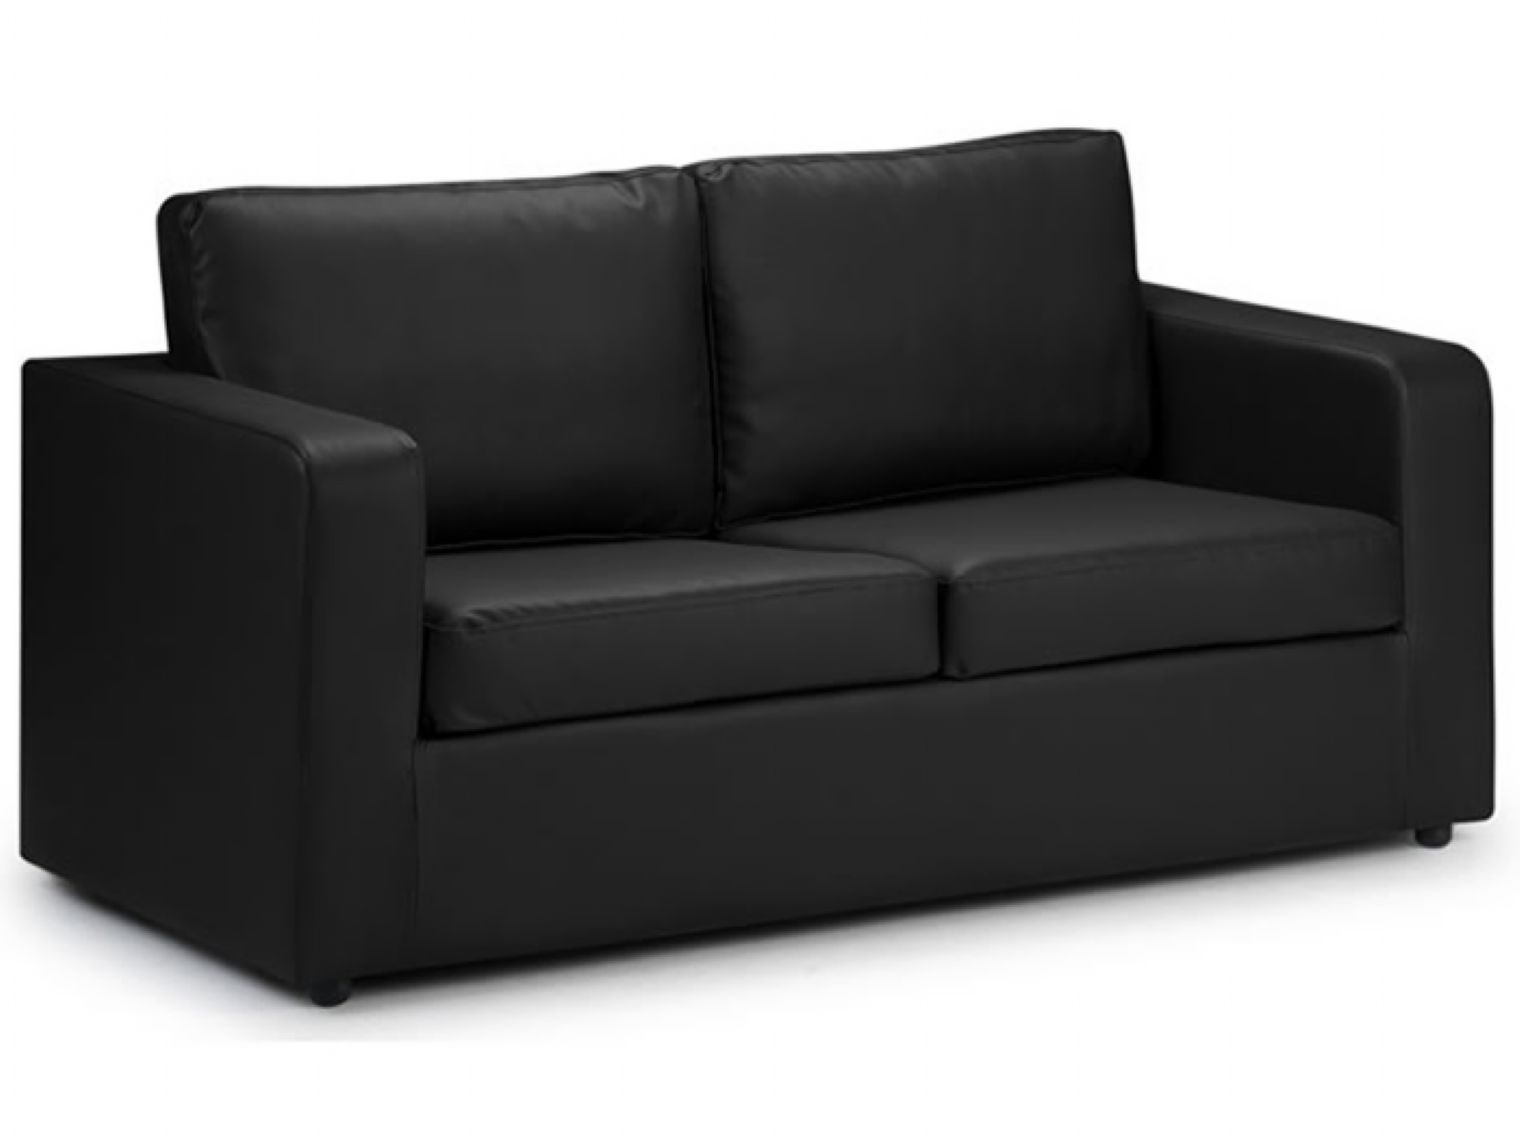 ... Sofa Bed | Sofa chair bed | Modern Leather sofa bed ikea: Leather sofa